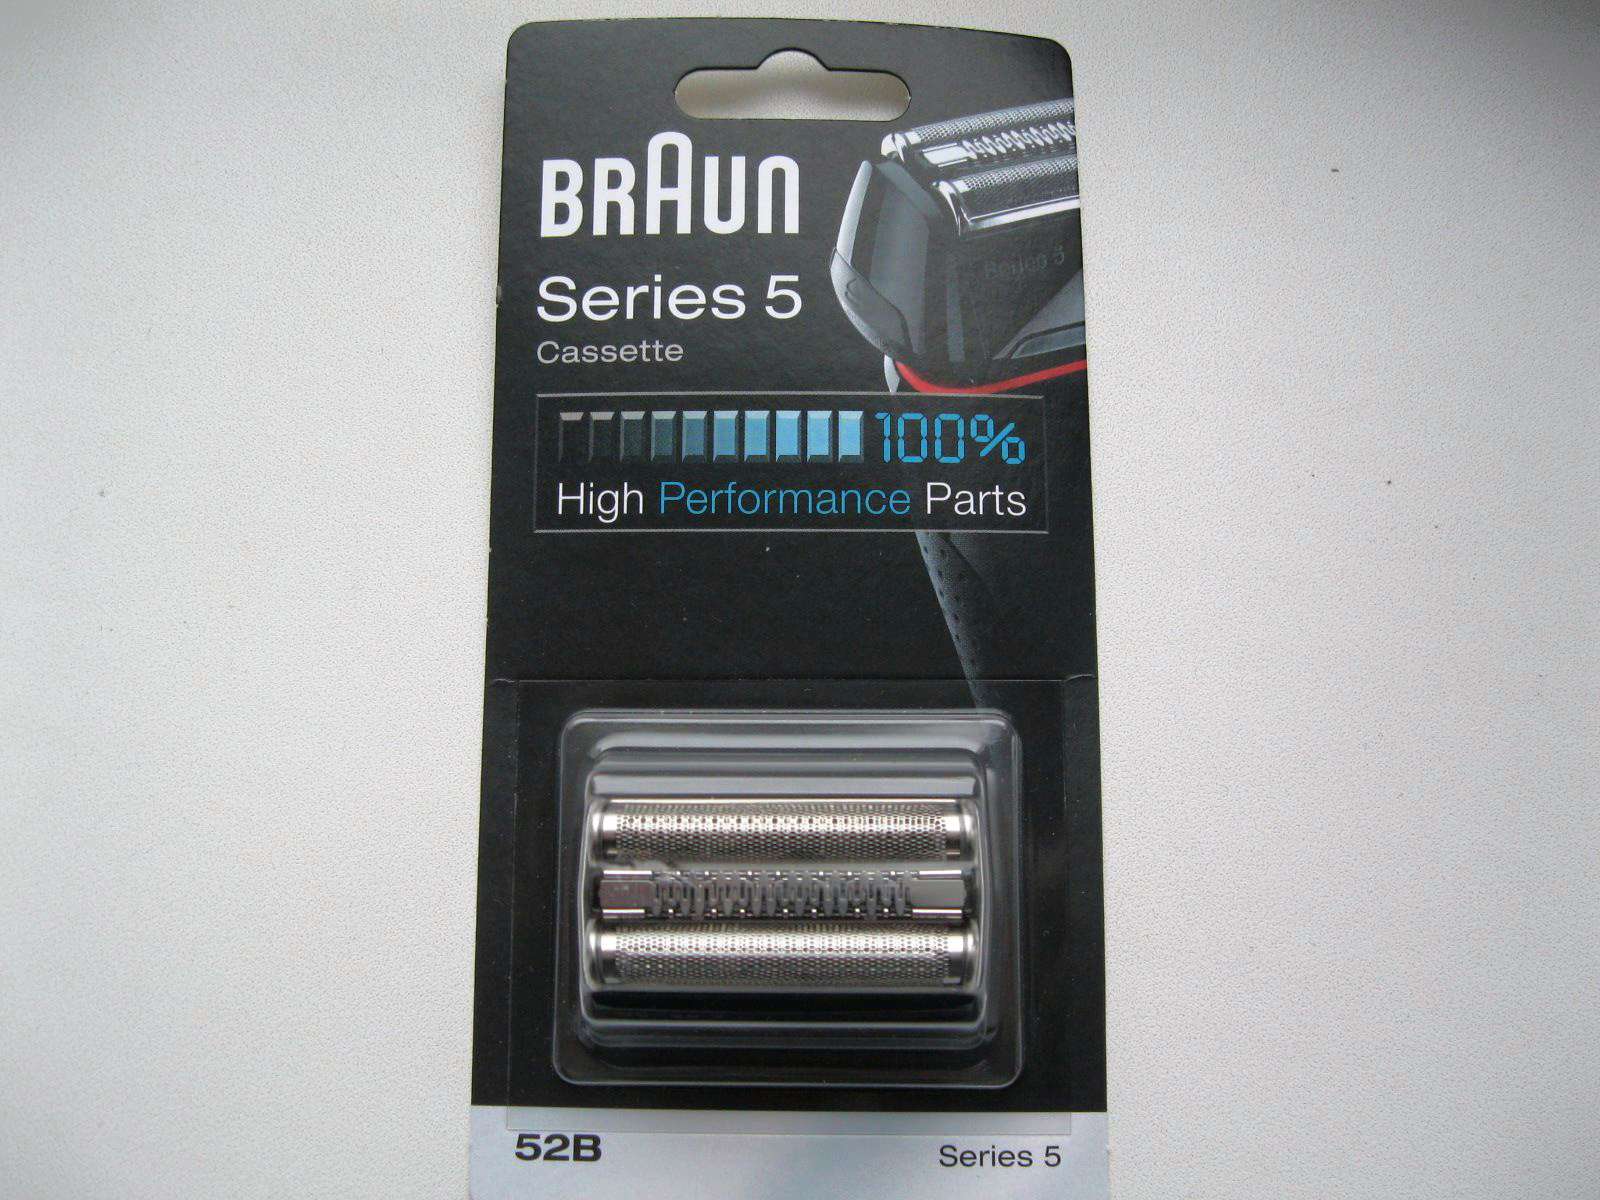 Сетка braun series 5. Сетка и режущий блок Braun 52b. Сетка Браун 52 b. Режущий блок Braun Series 5 52b. Браун 52b сетка для бритвы.